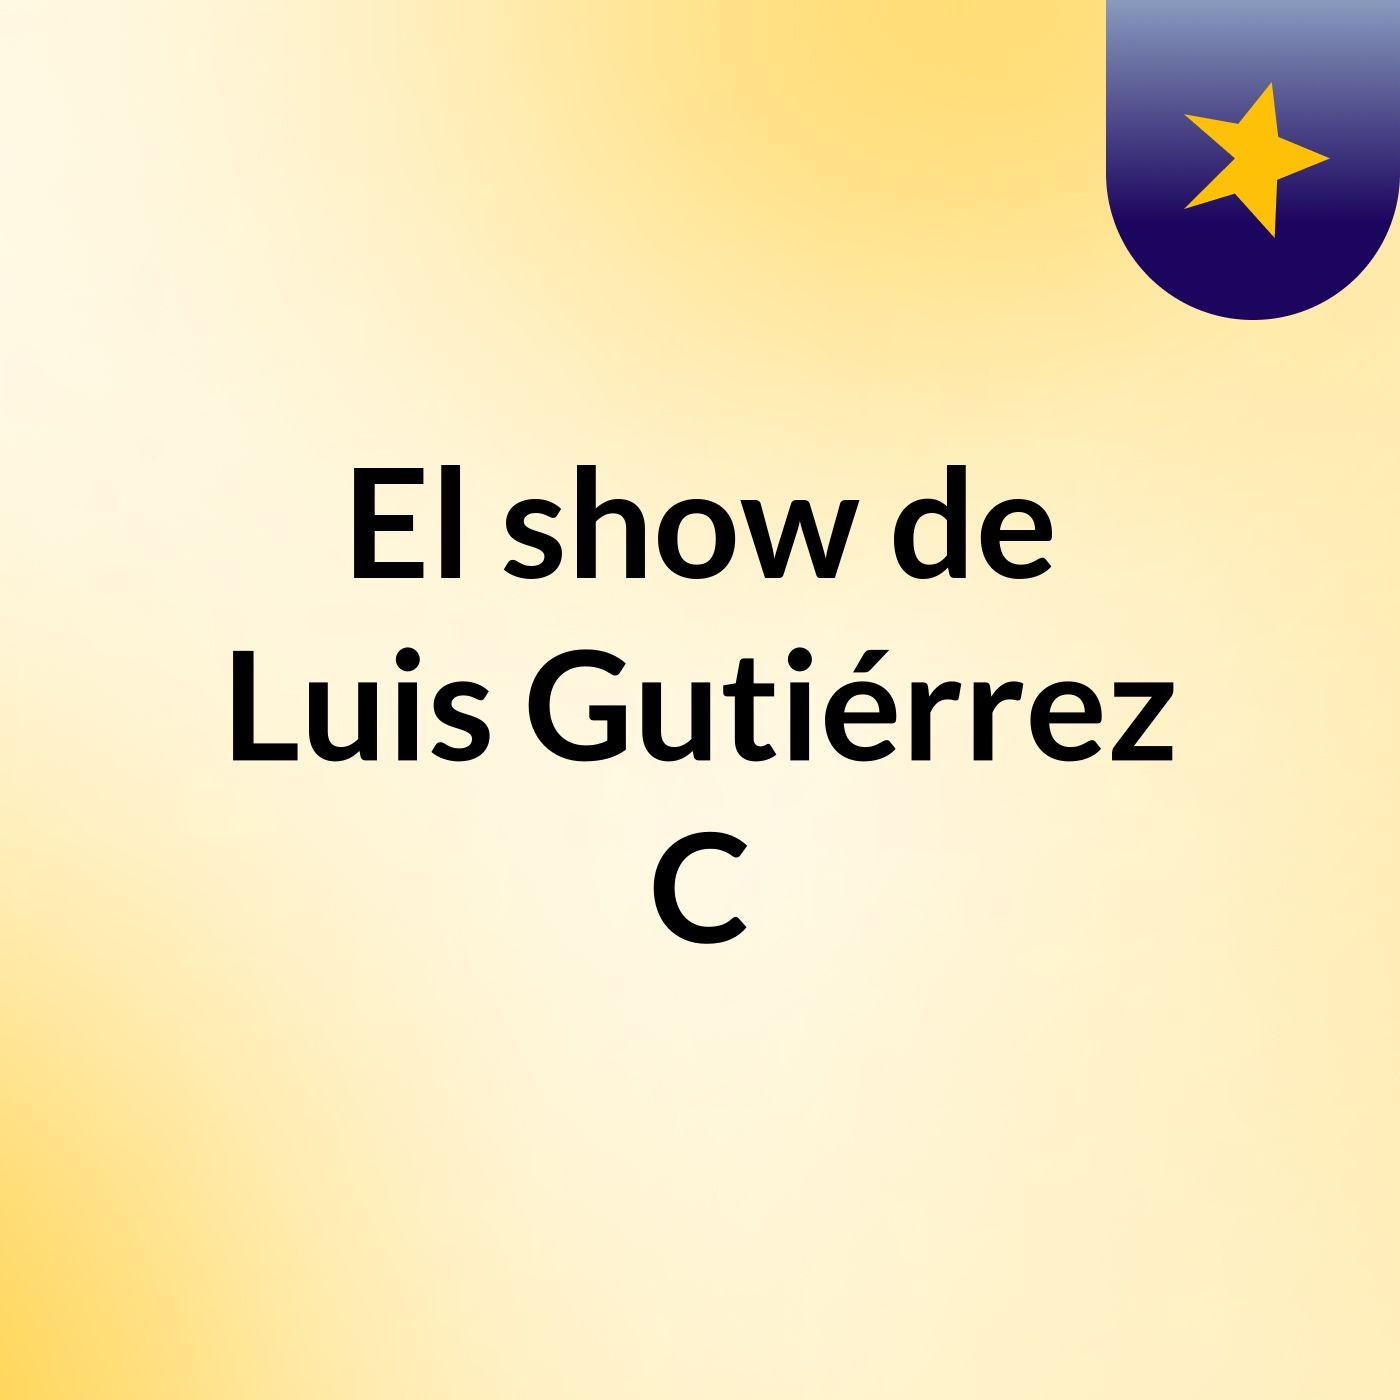 El show de Luis Gutiérrez C